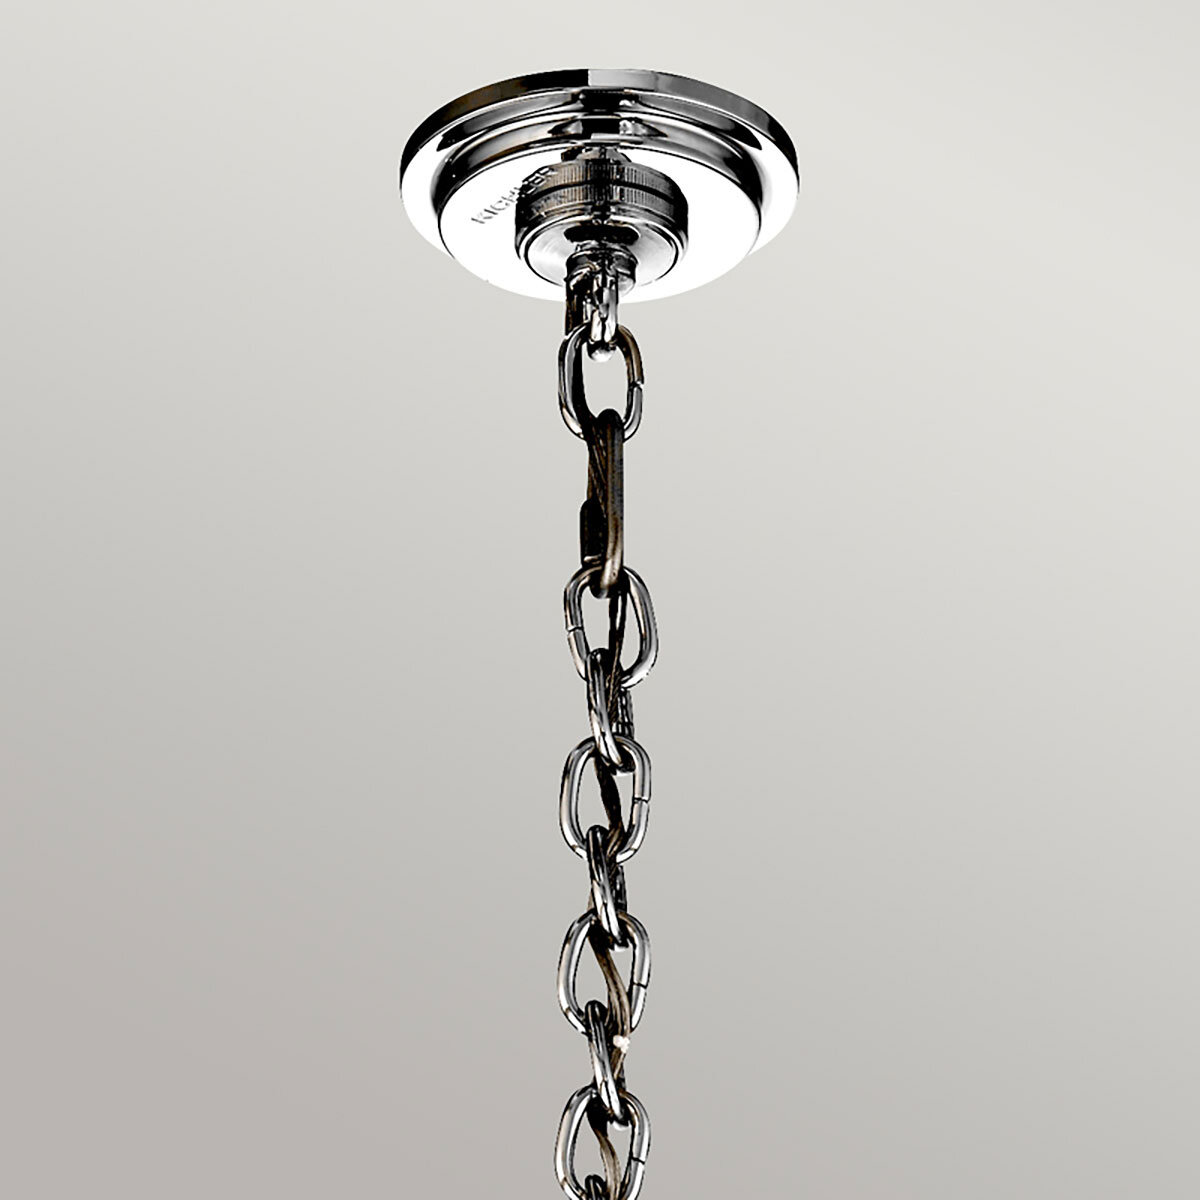 closeup image of chandelier